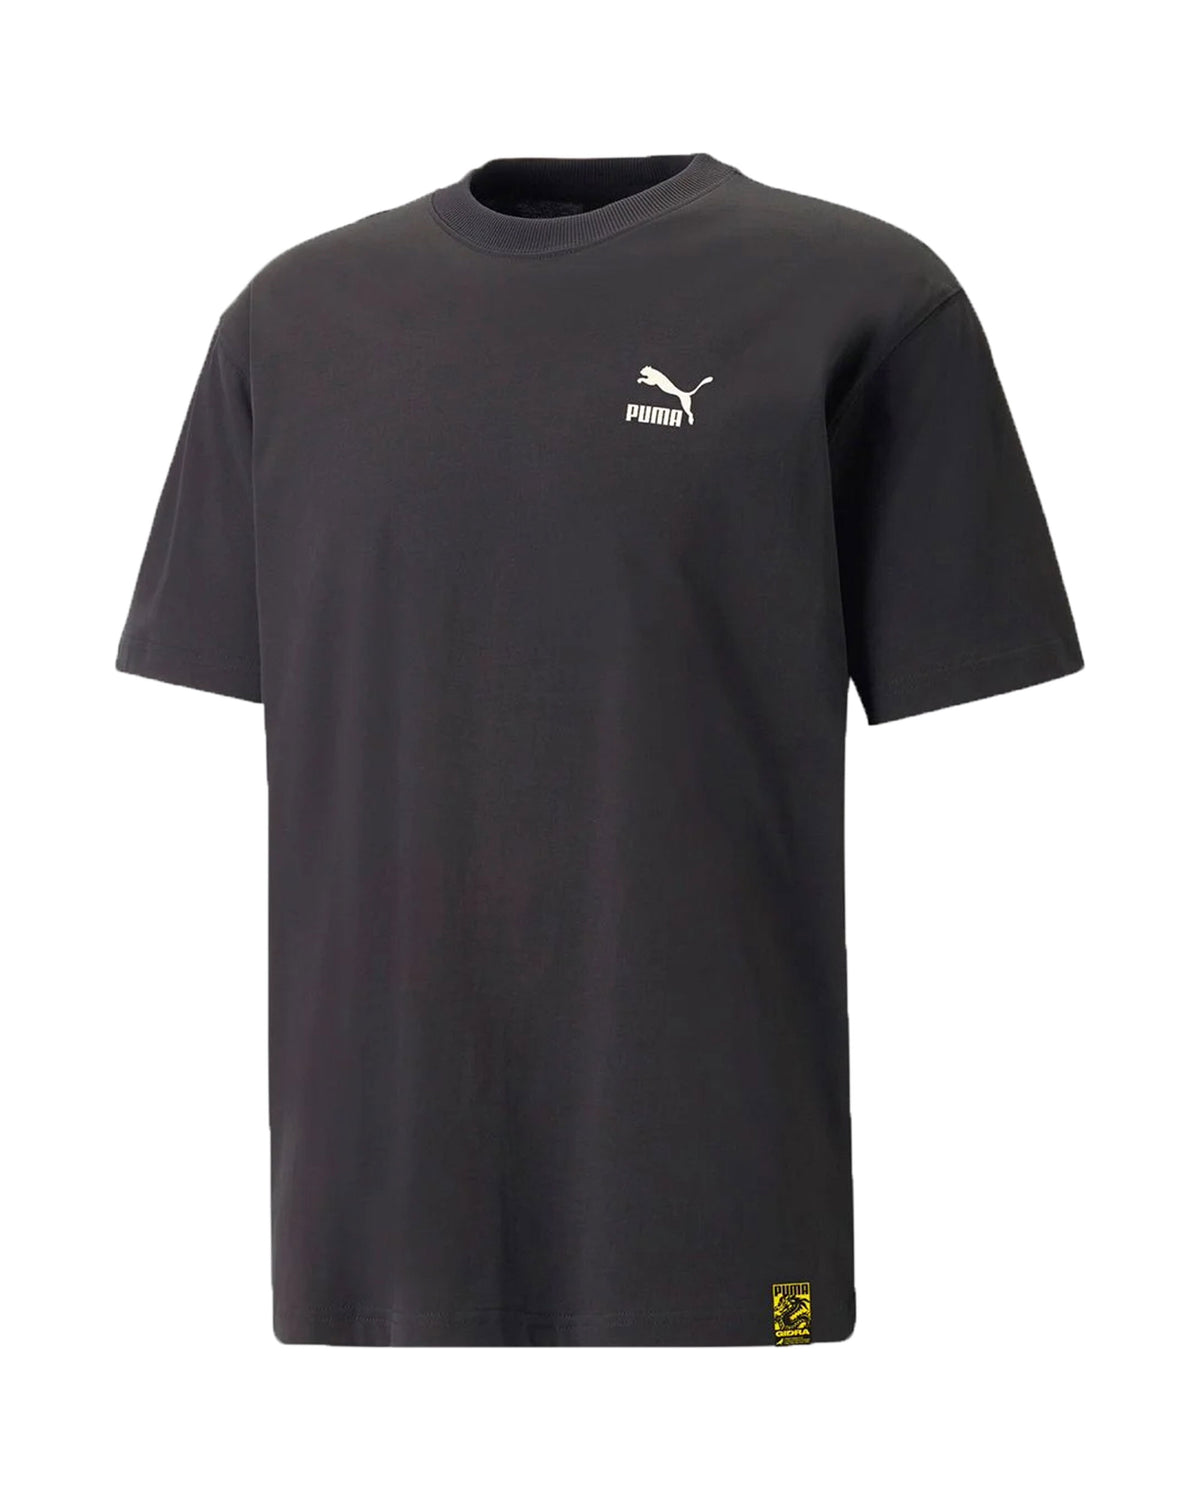 Puma x Staple T-shirt Black